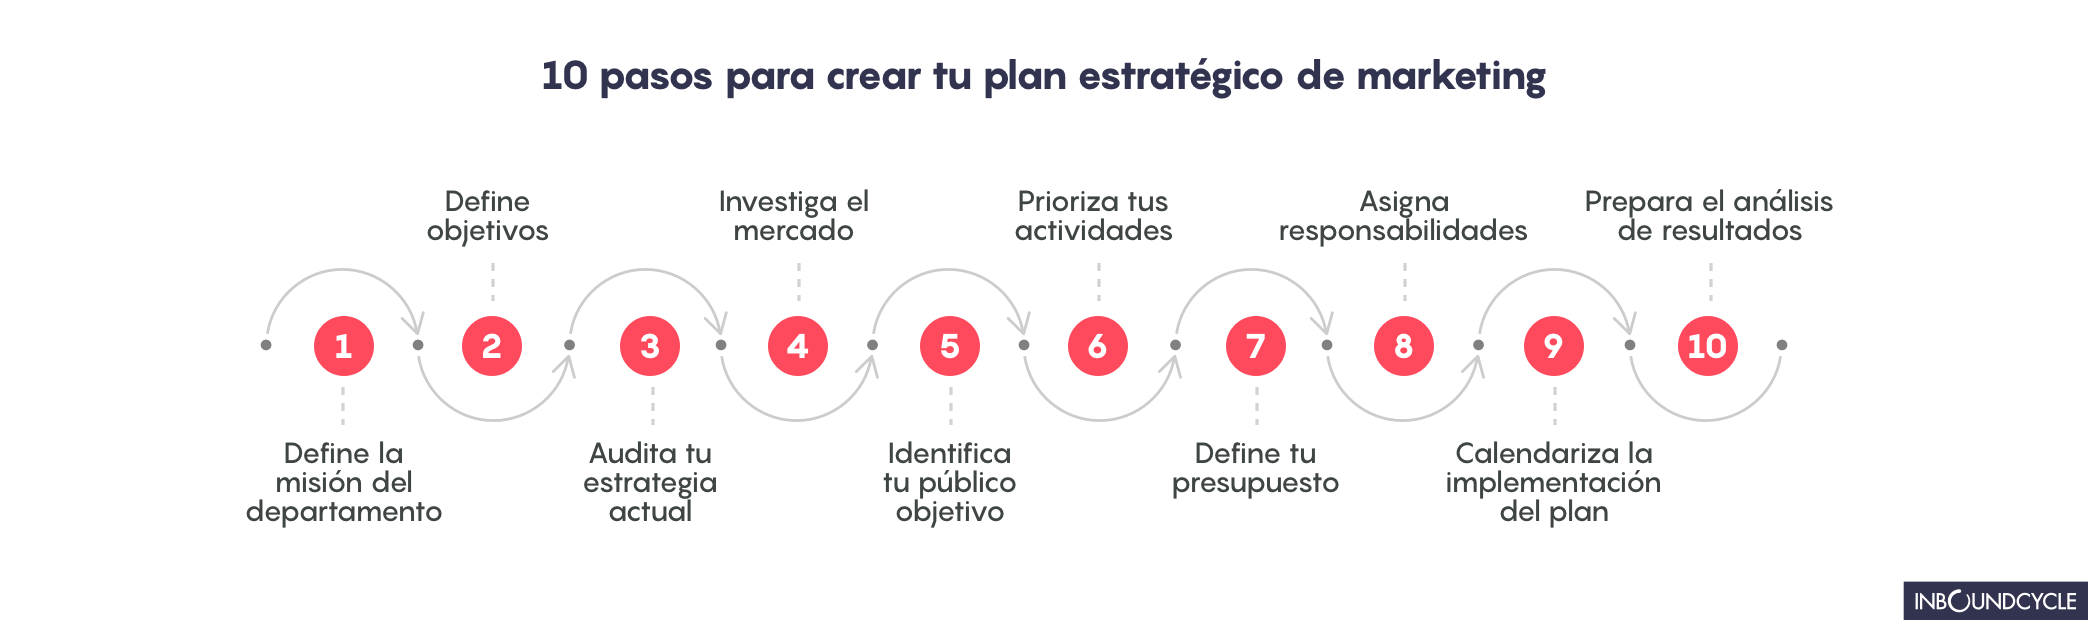 10_pasos_para_crear_tu_plan_estratégico_de_marketing